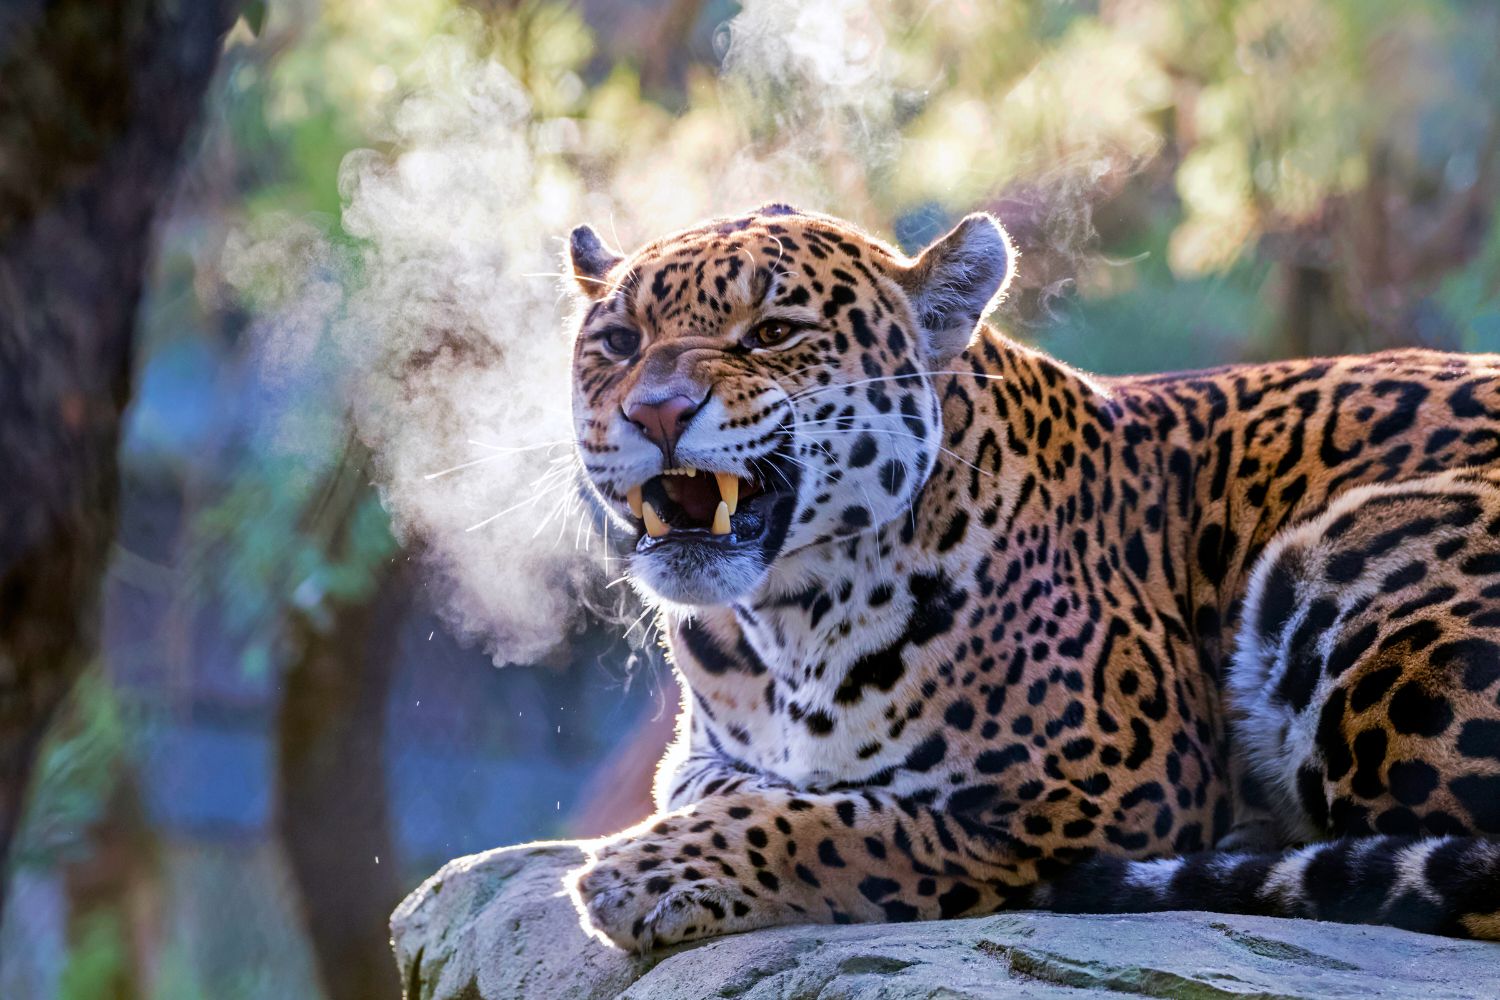 5. The roar of the jaguar.